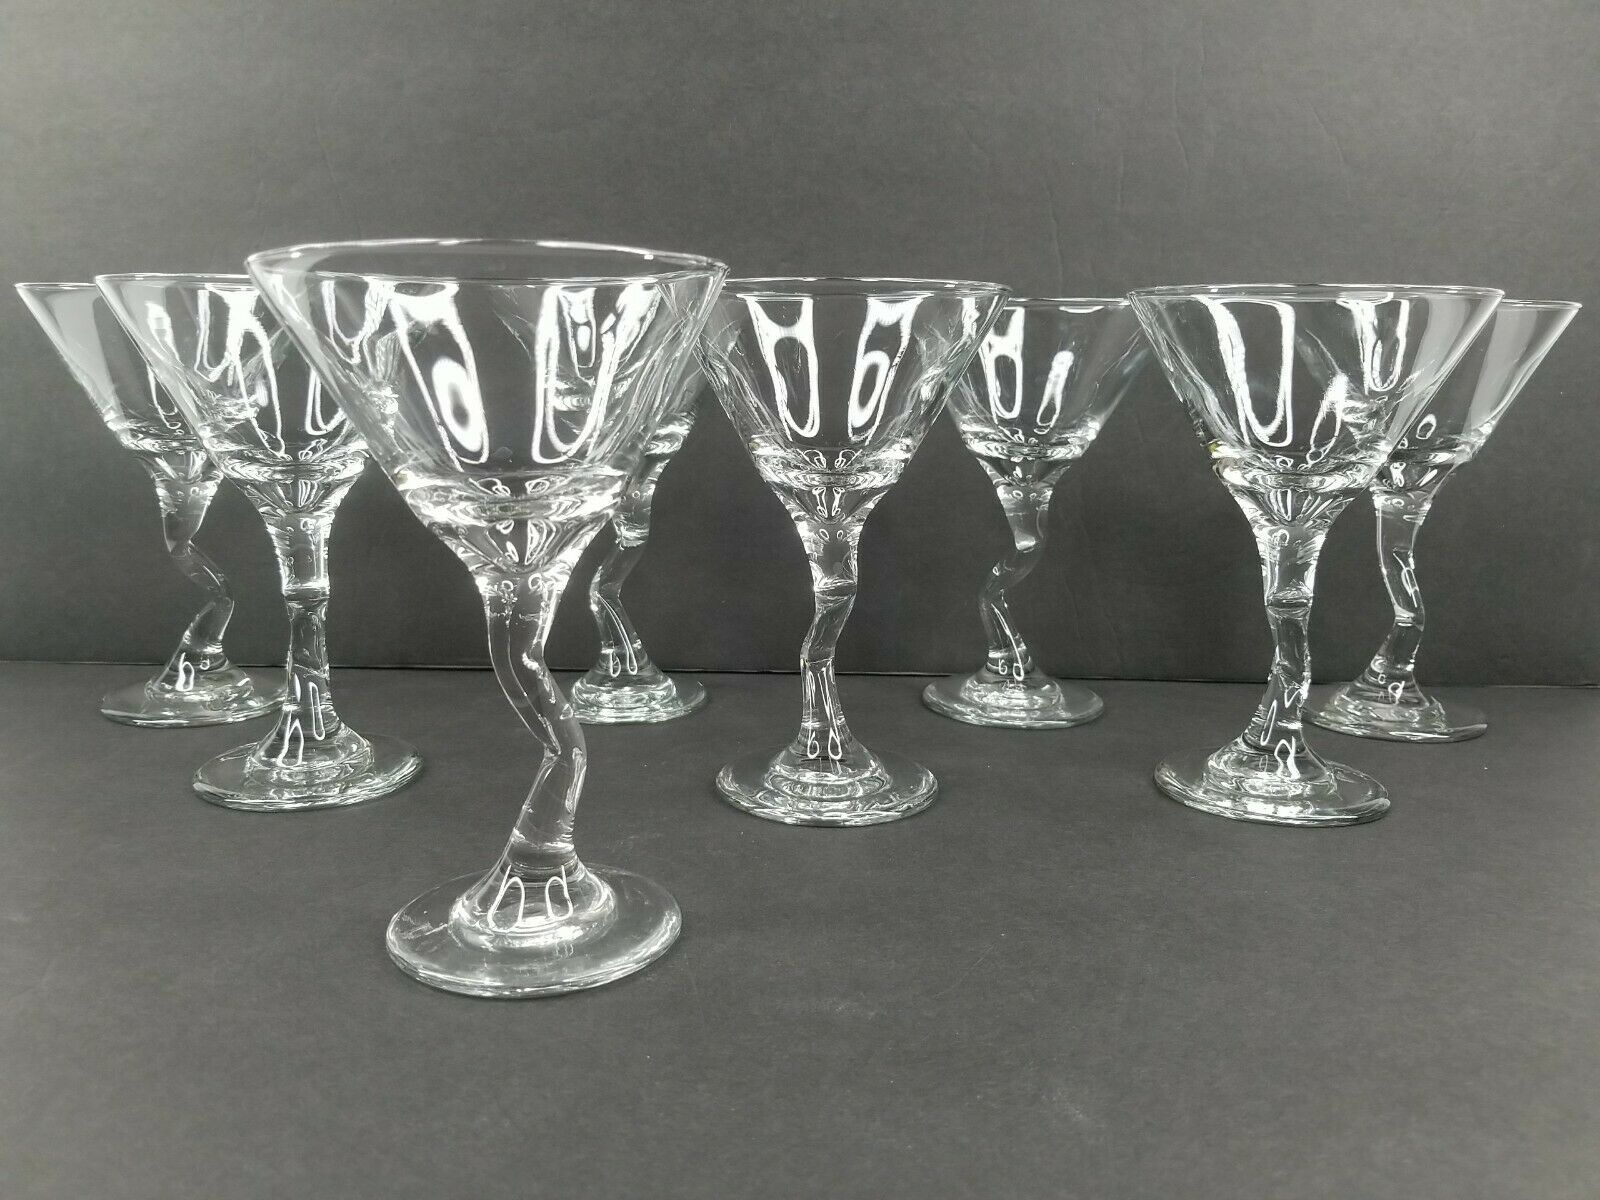 Libbey Z-Stem Cocktail Glasses, Set of 3 – gisela&Zoe